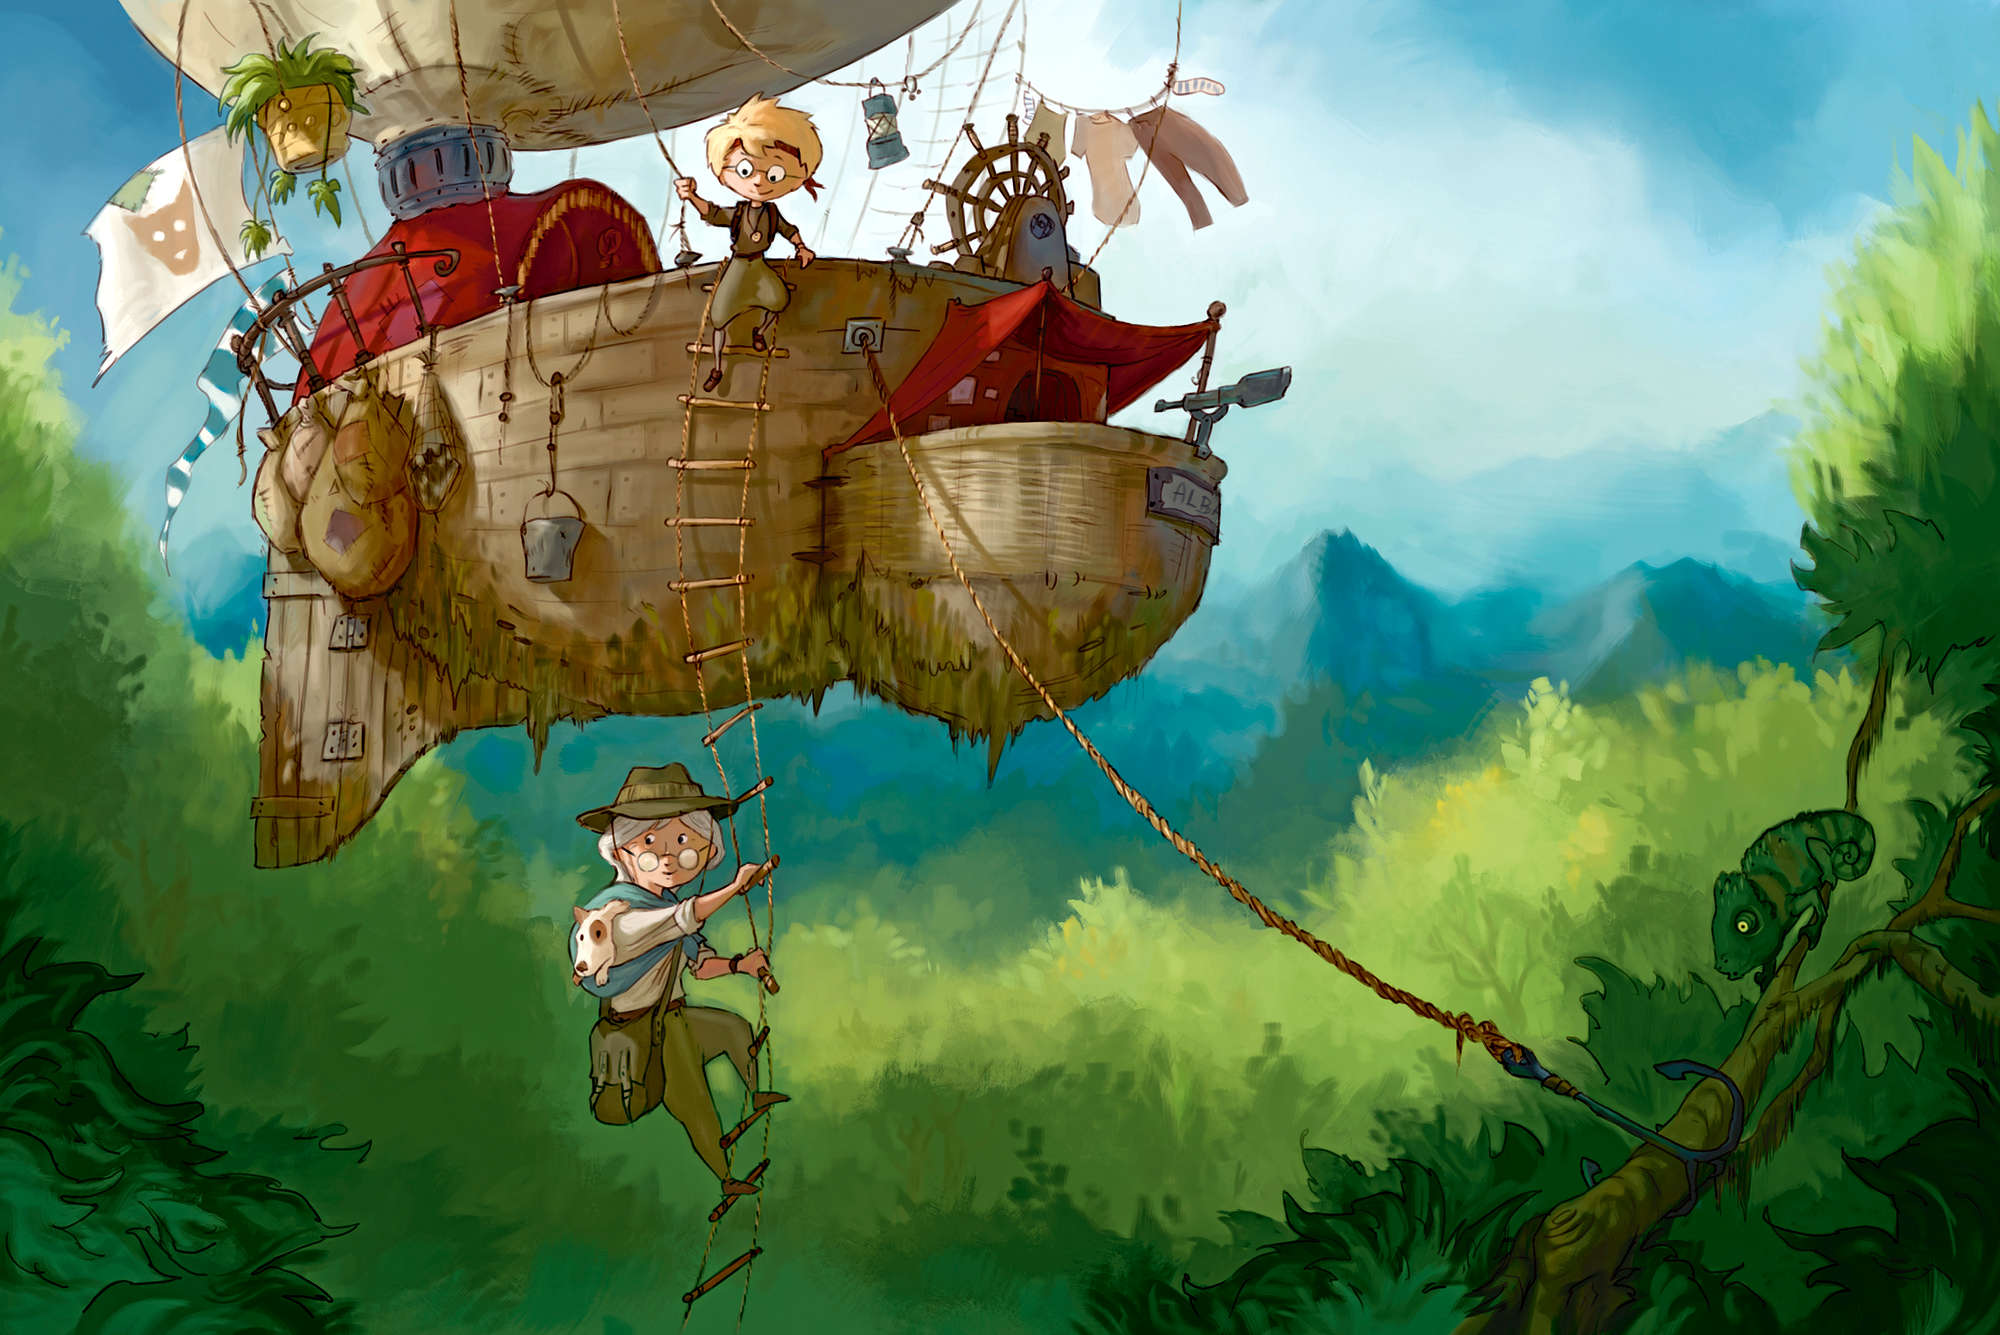             Kids mural adventurer with flying ship on premium smooth vinyl
        